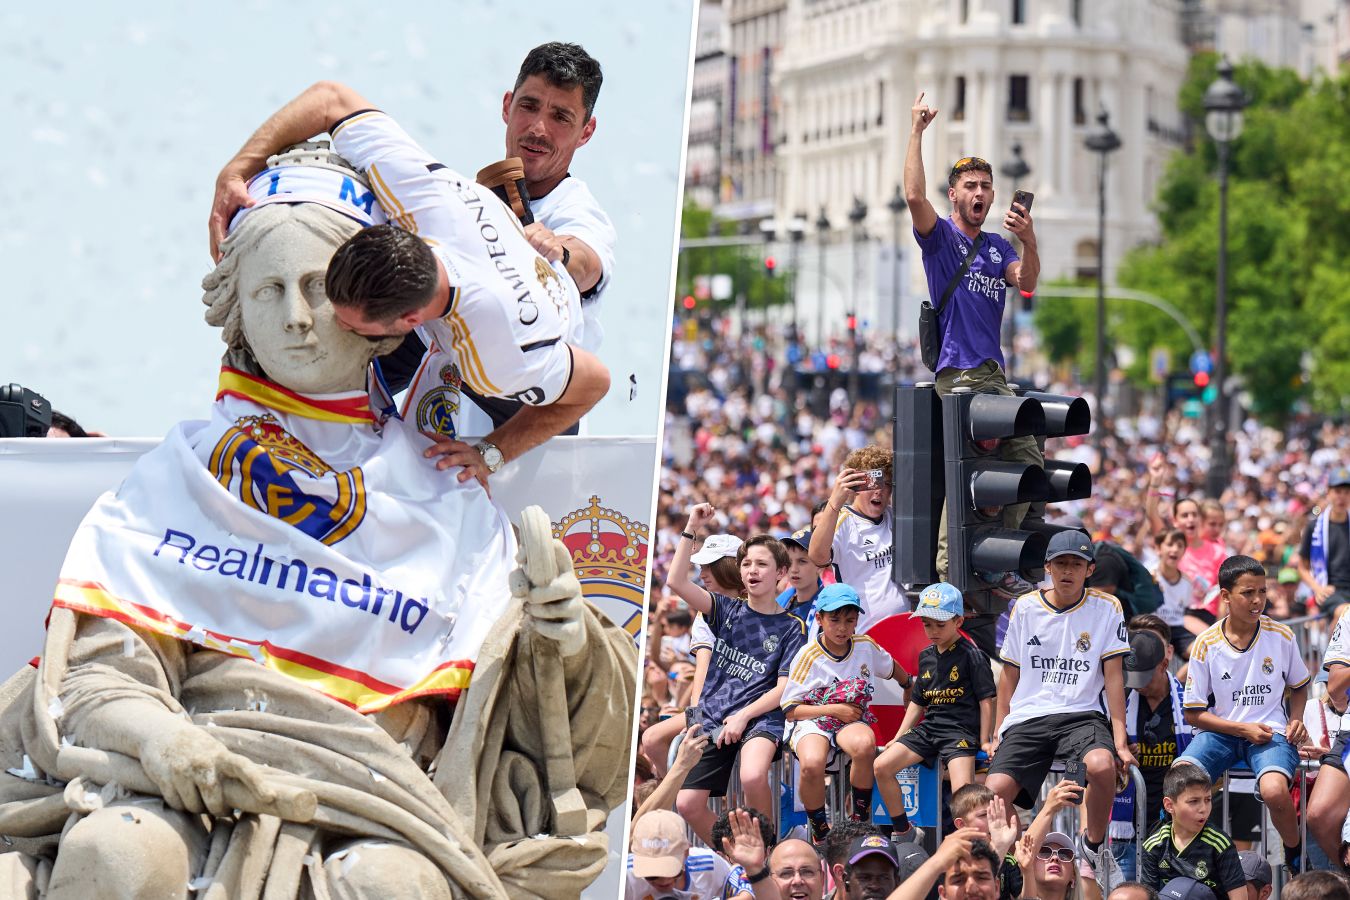 Начо целовал статую, фанаты залезали на светофор. Фото чемпионского парада «Реала»